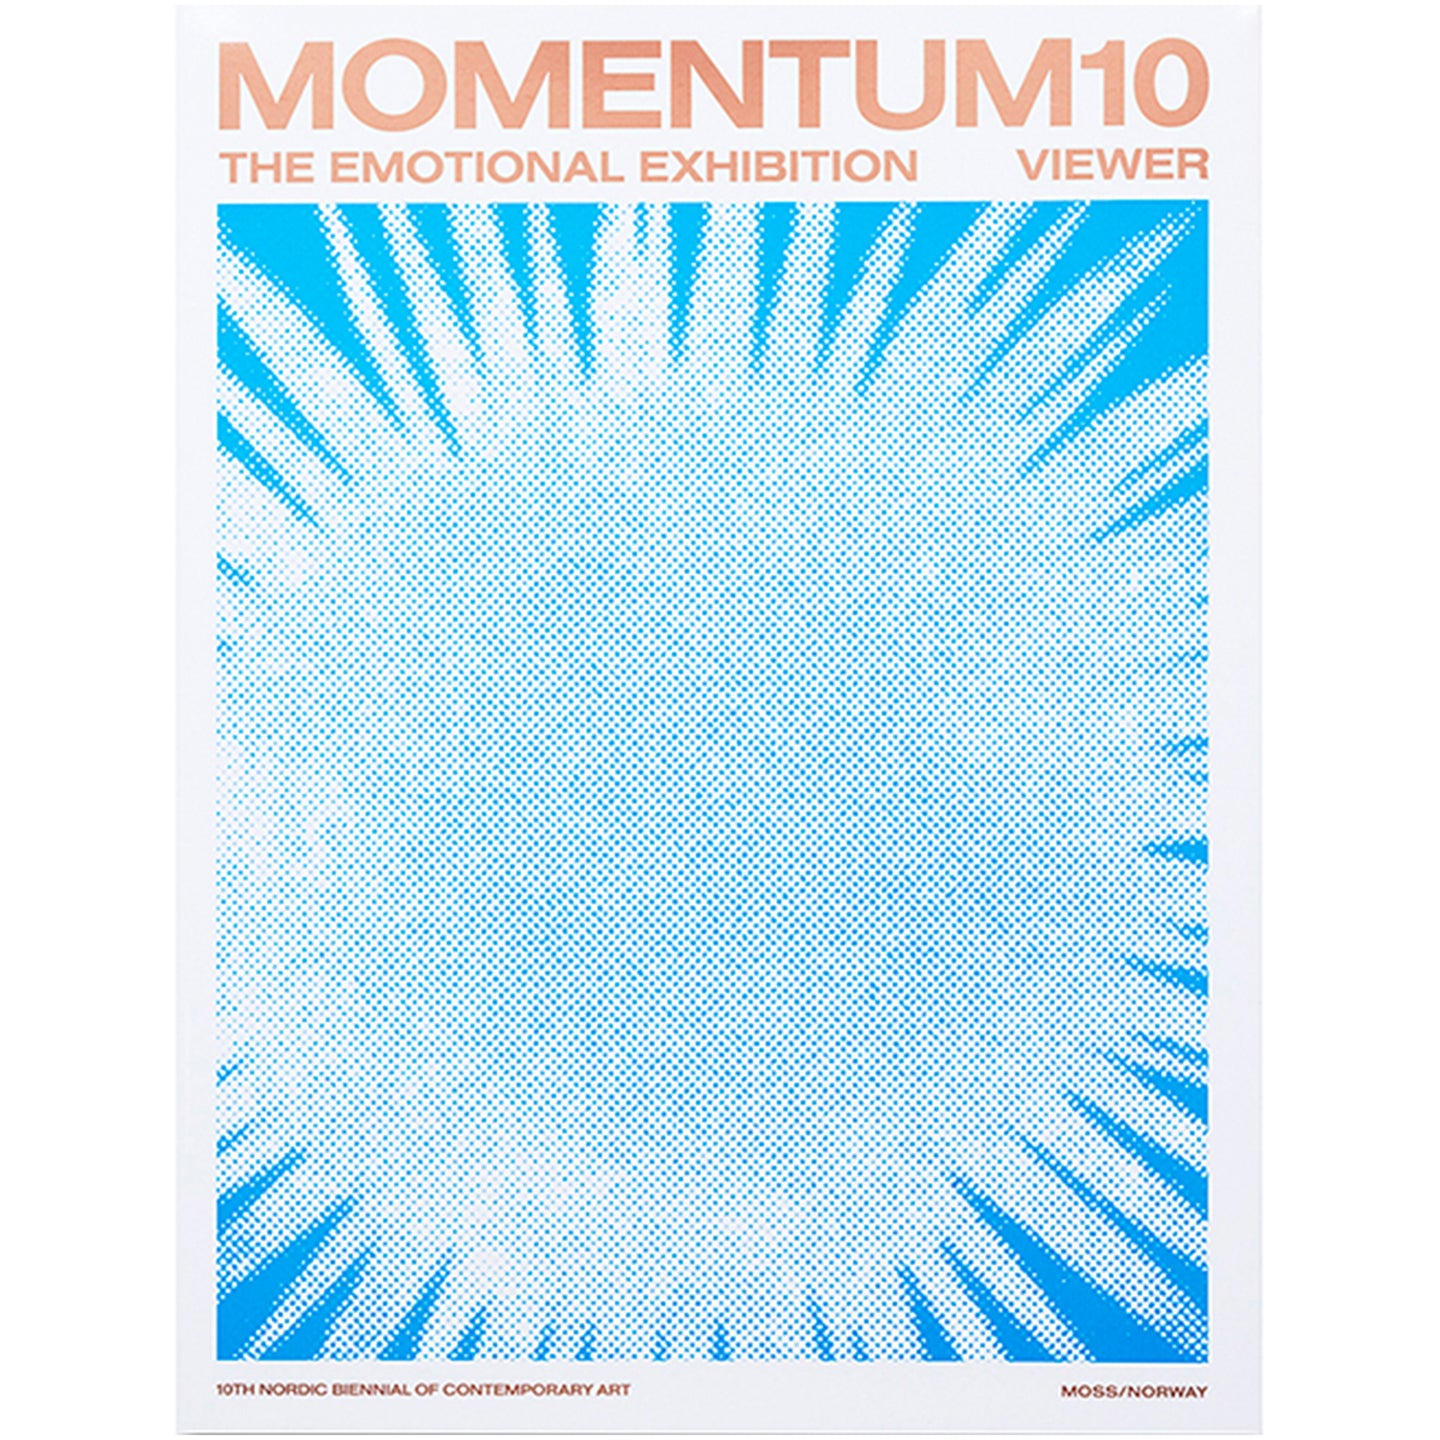 MOMENTUM10: THE VIEWER